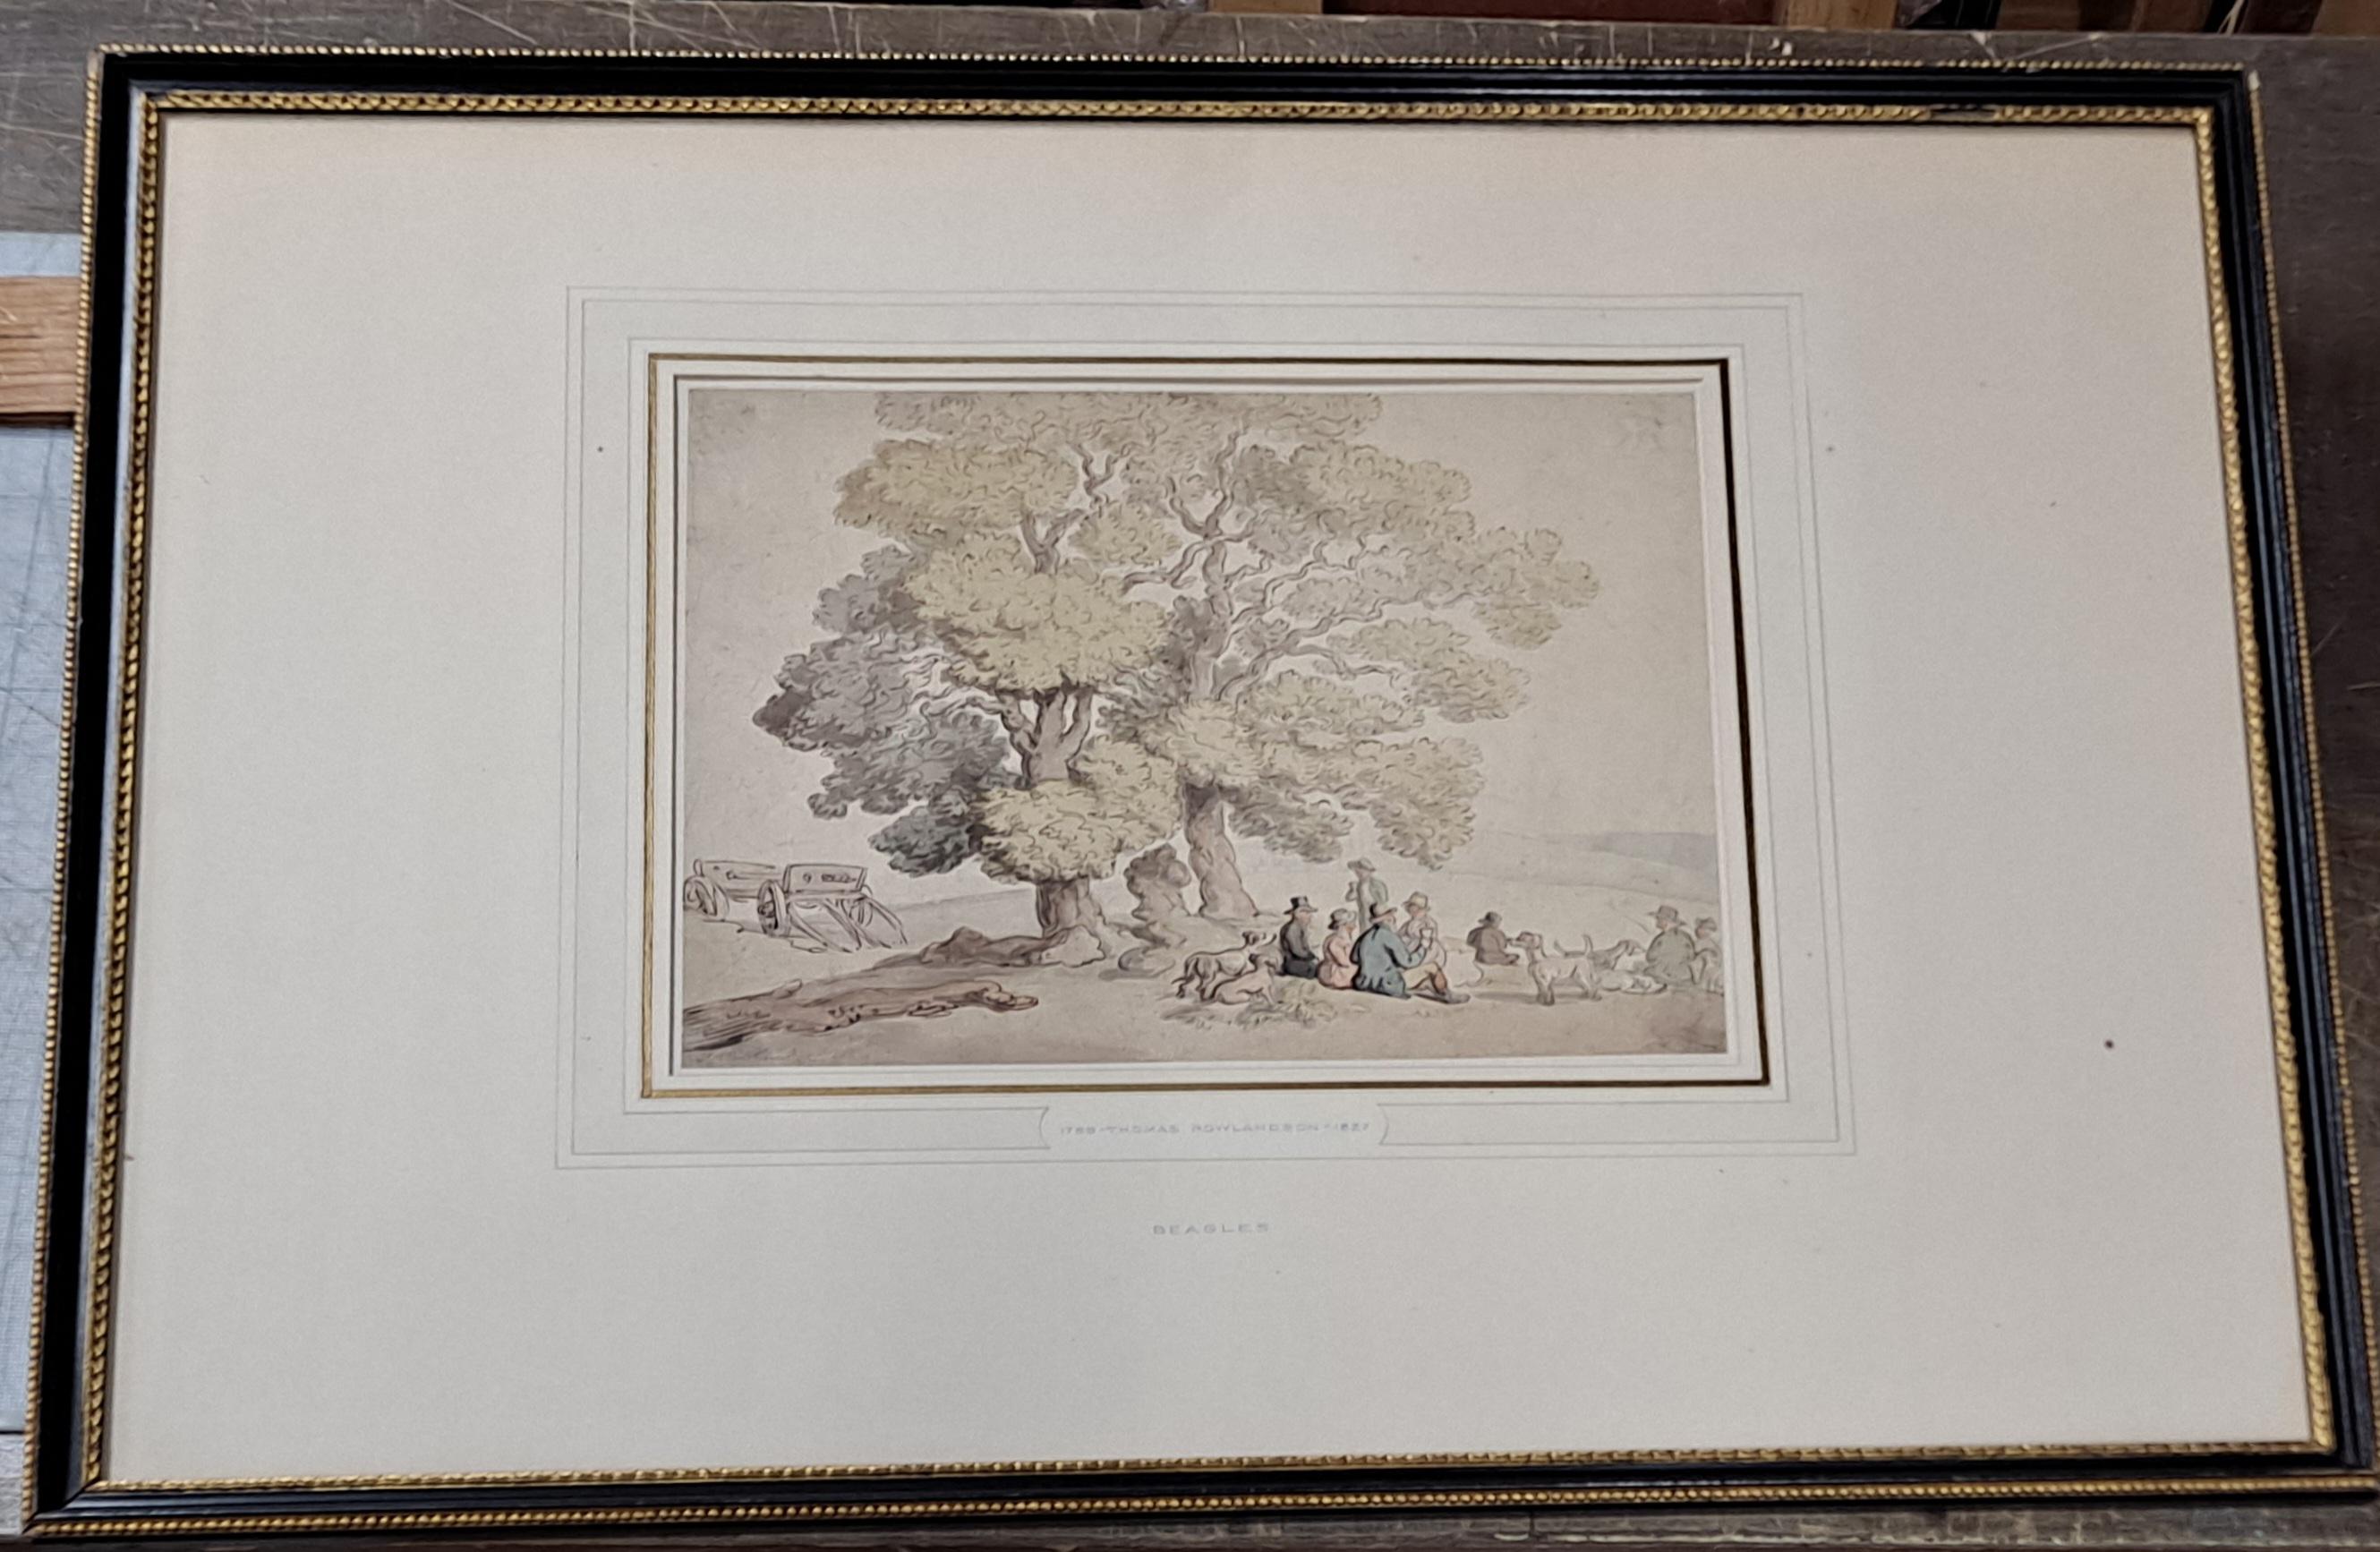 Animal Painting Thomas Rolandson - Thomas David (1756-1829) "Beagles" Aquarelle de David Rockefeller